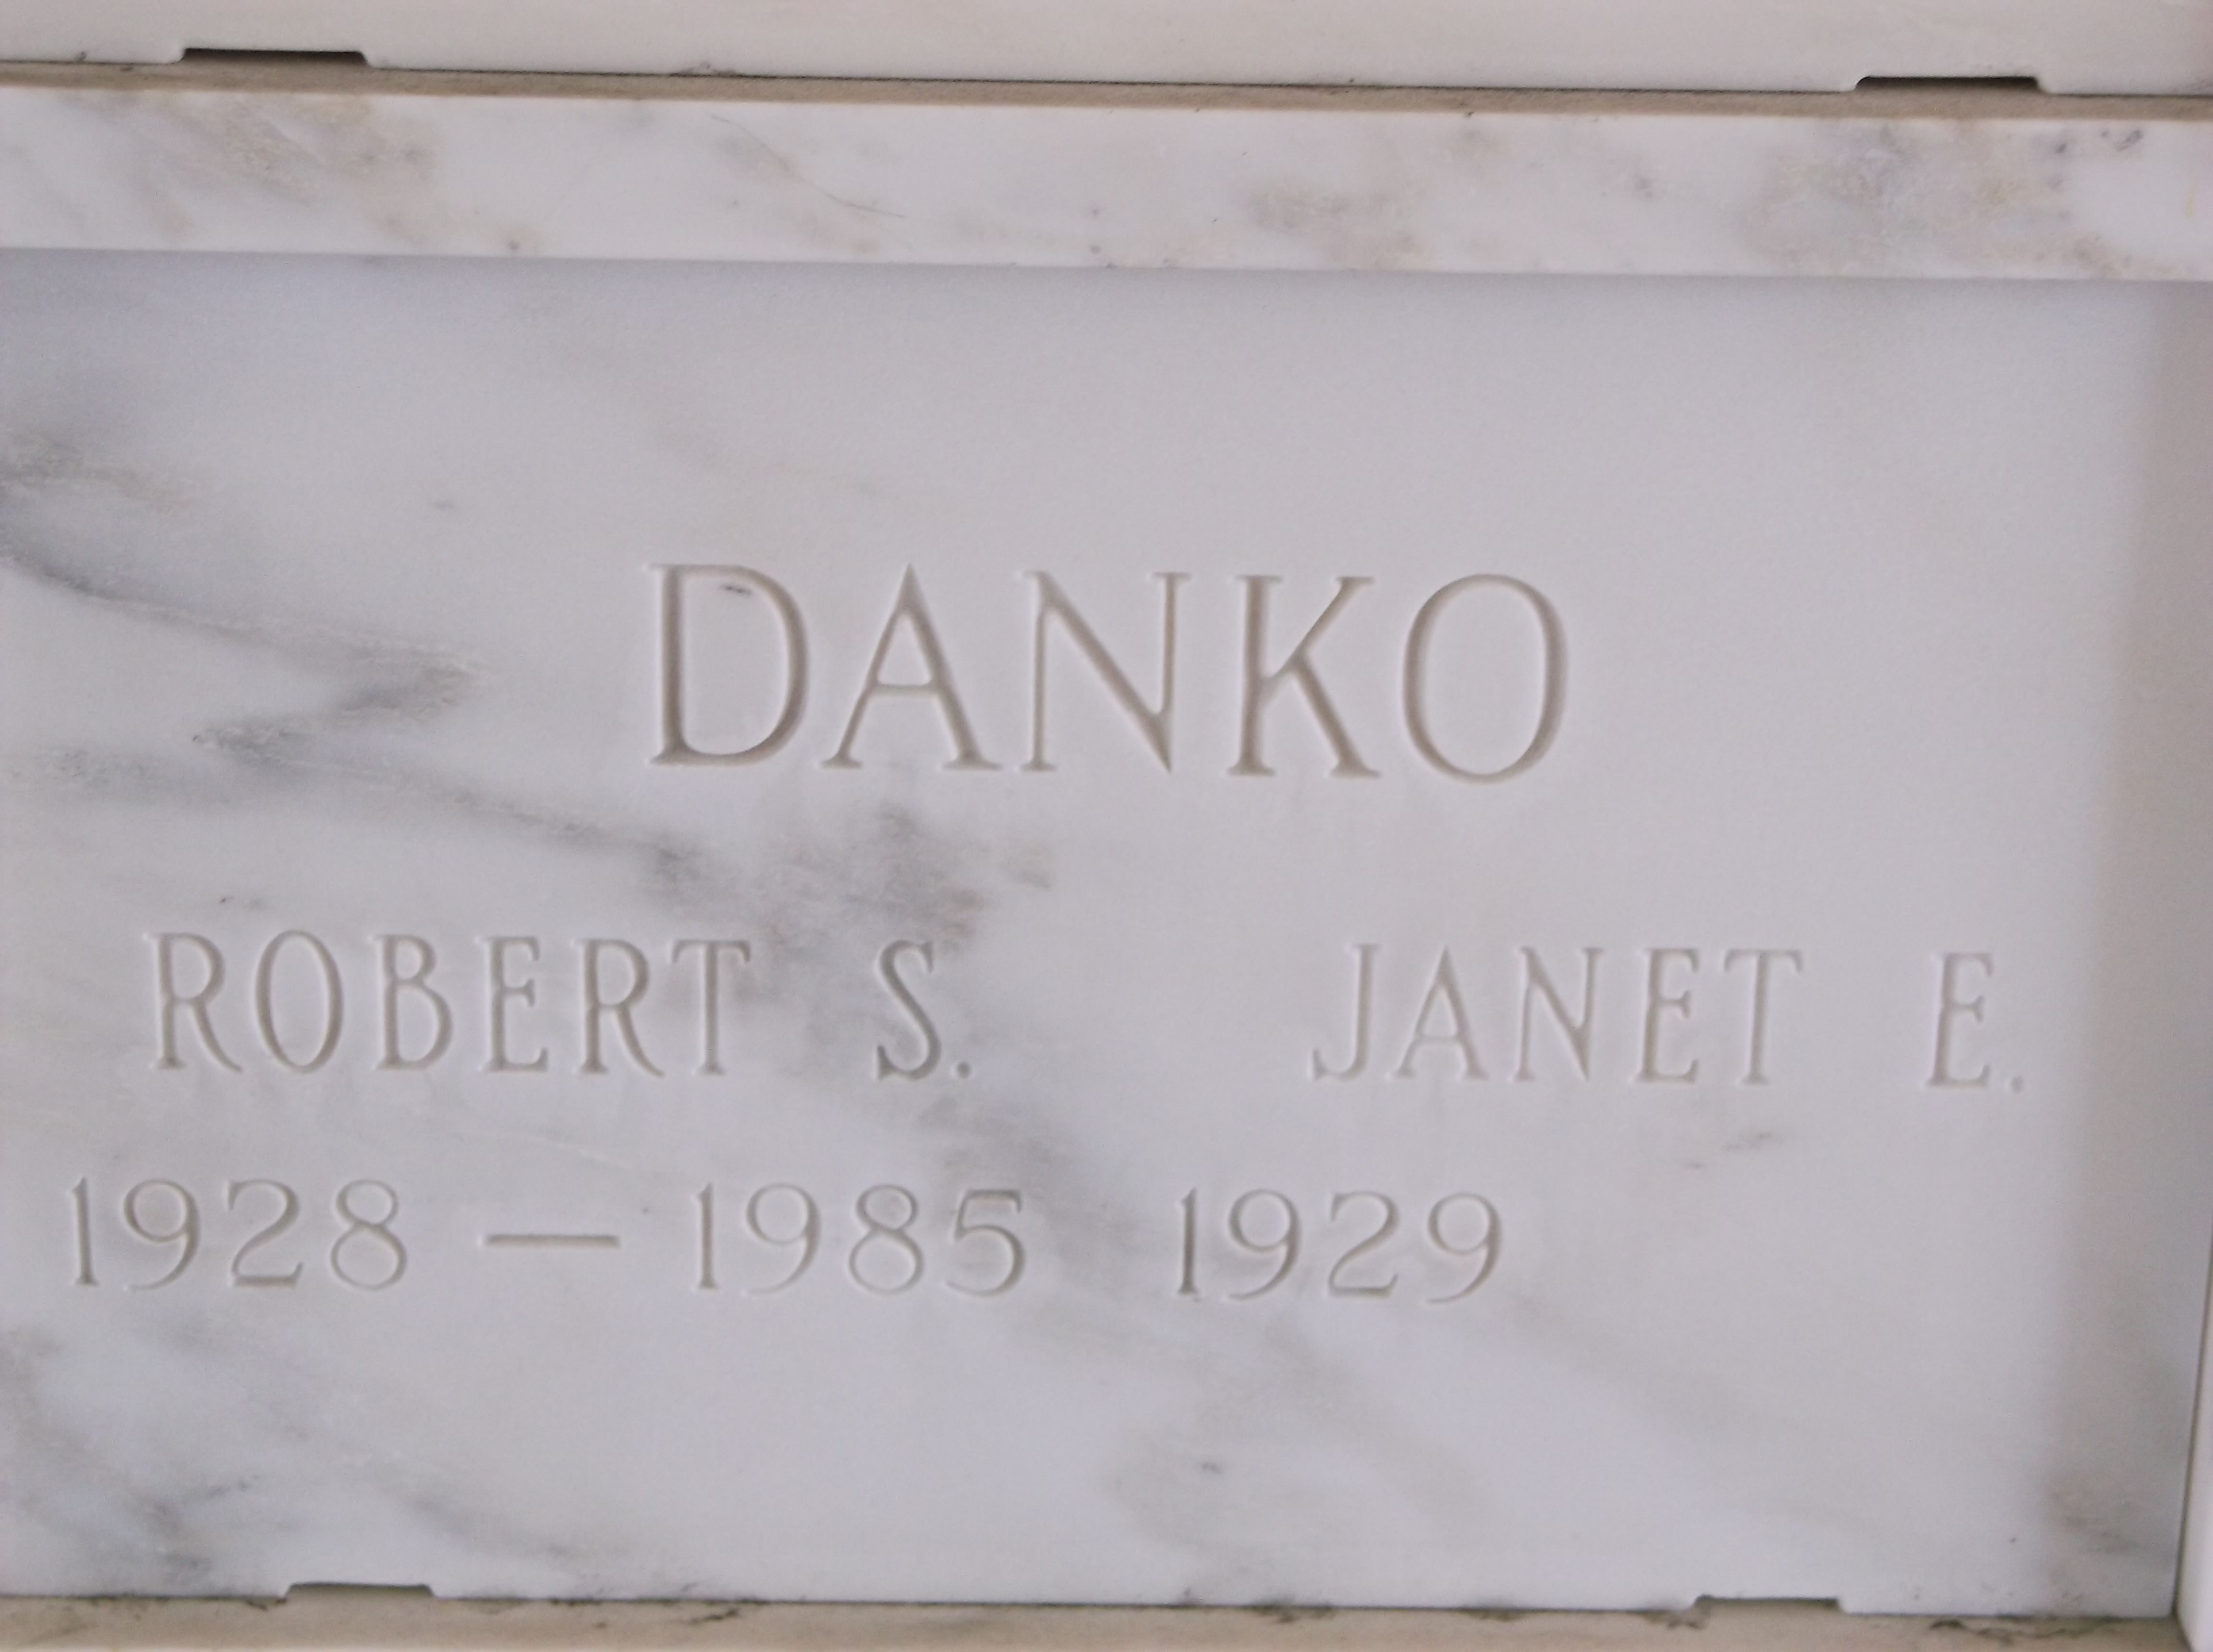 Janet E Danko